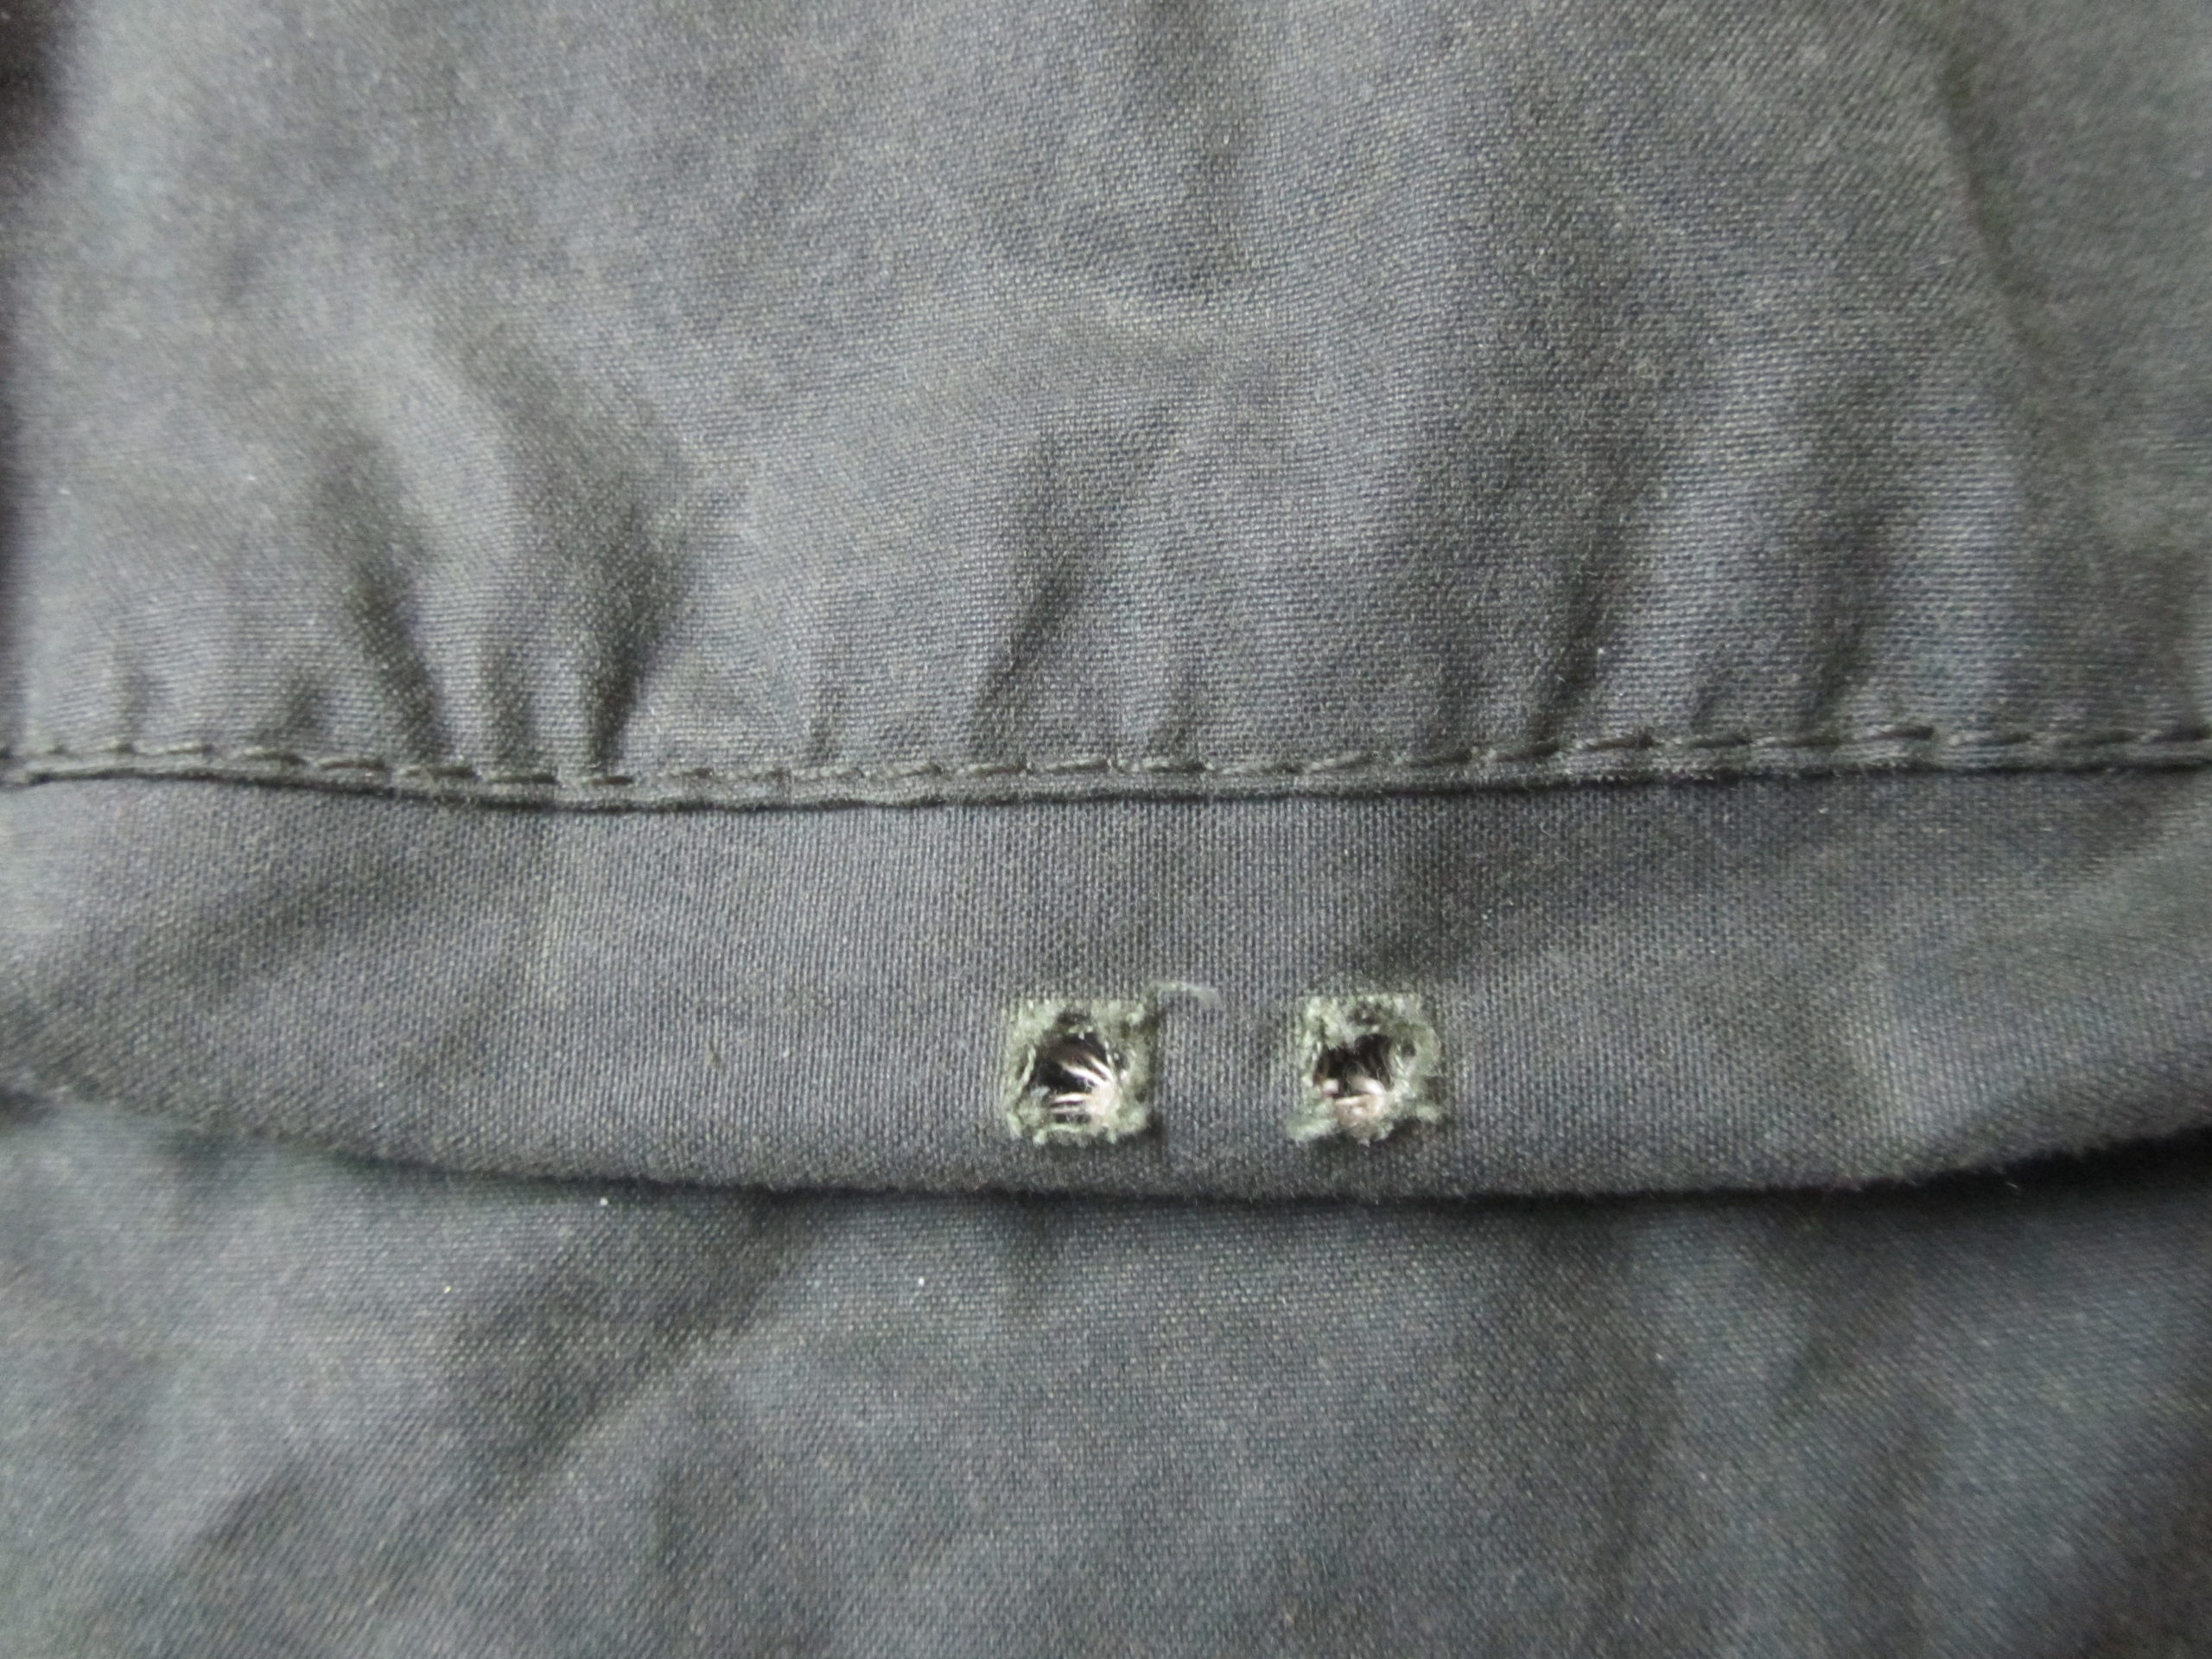 Barbour Beaufort waxed jacket C38 / 97 cm - Vintage Store